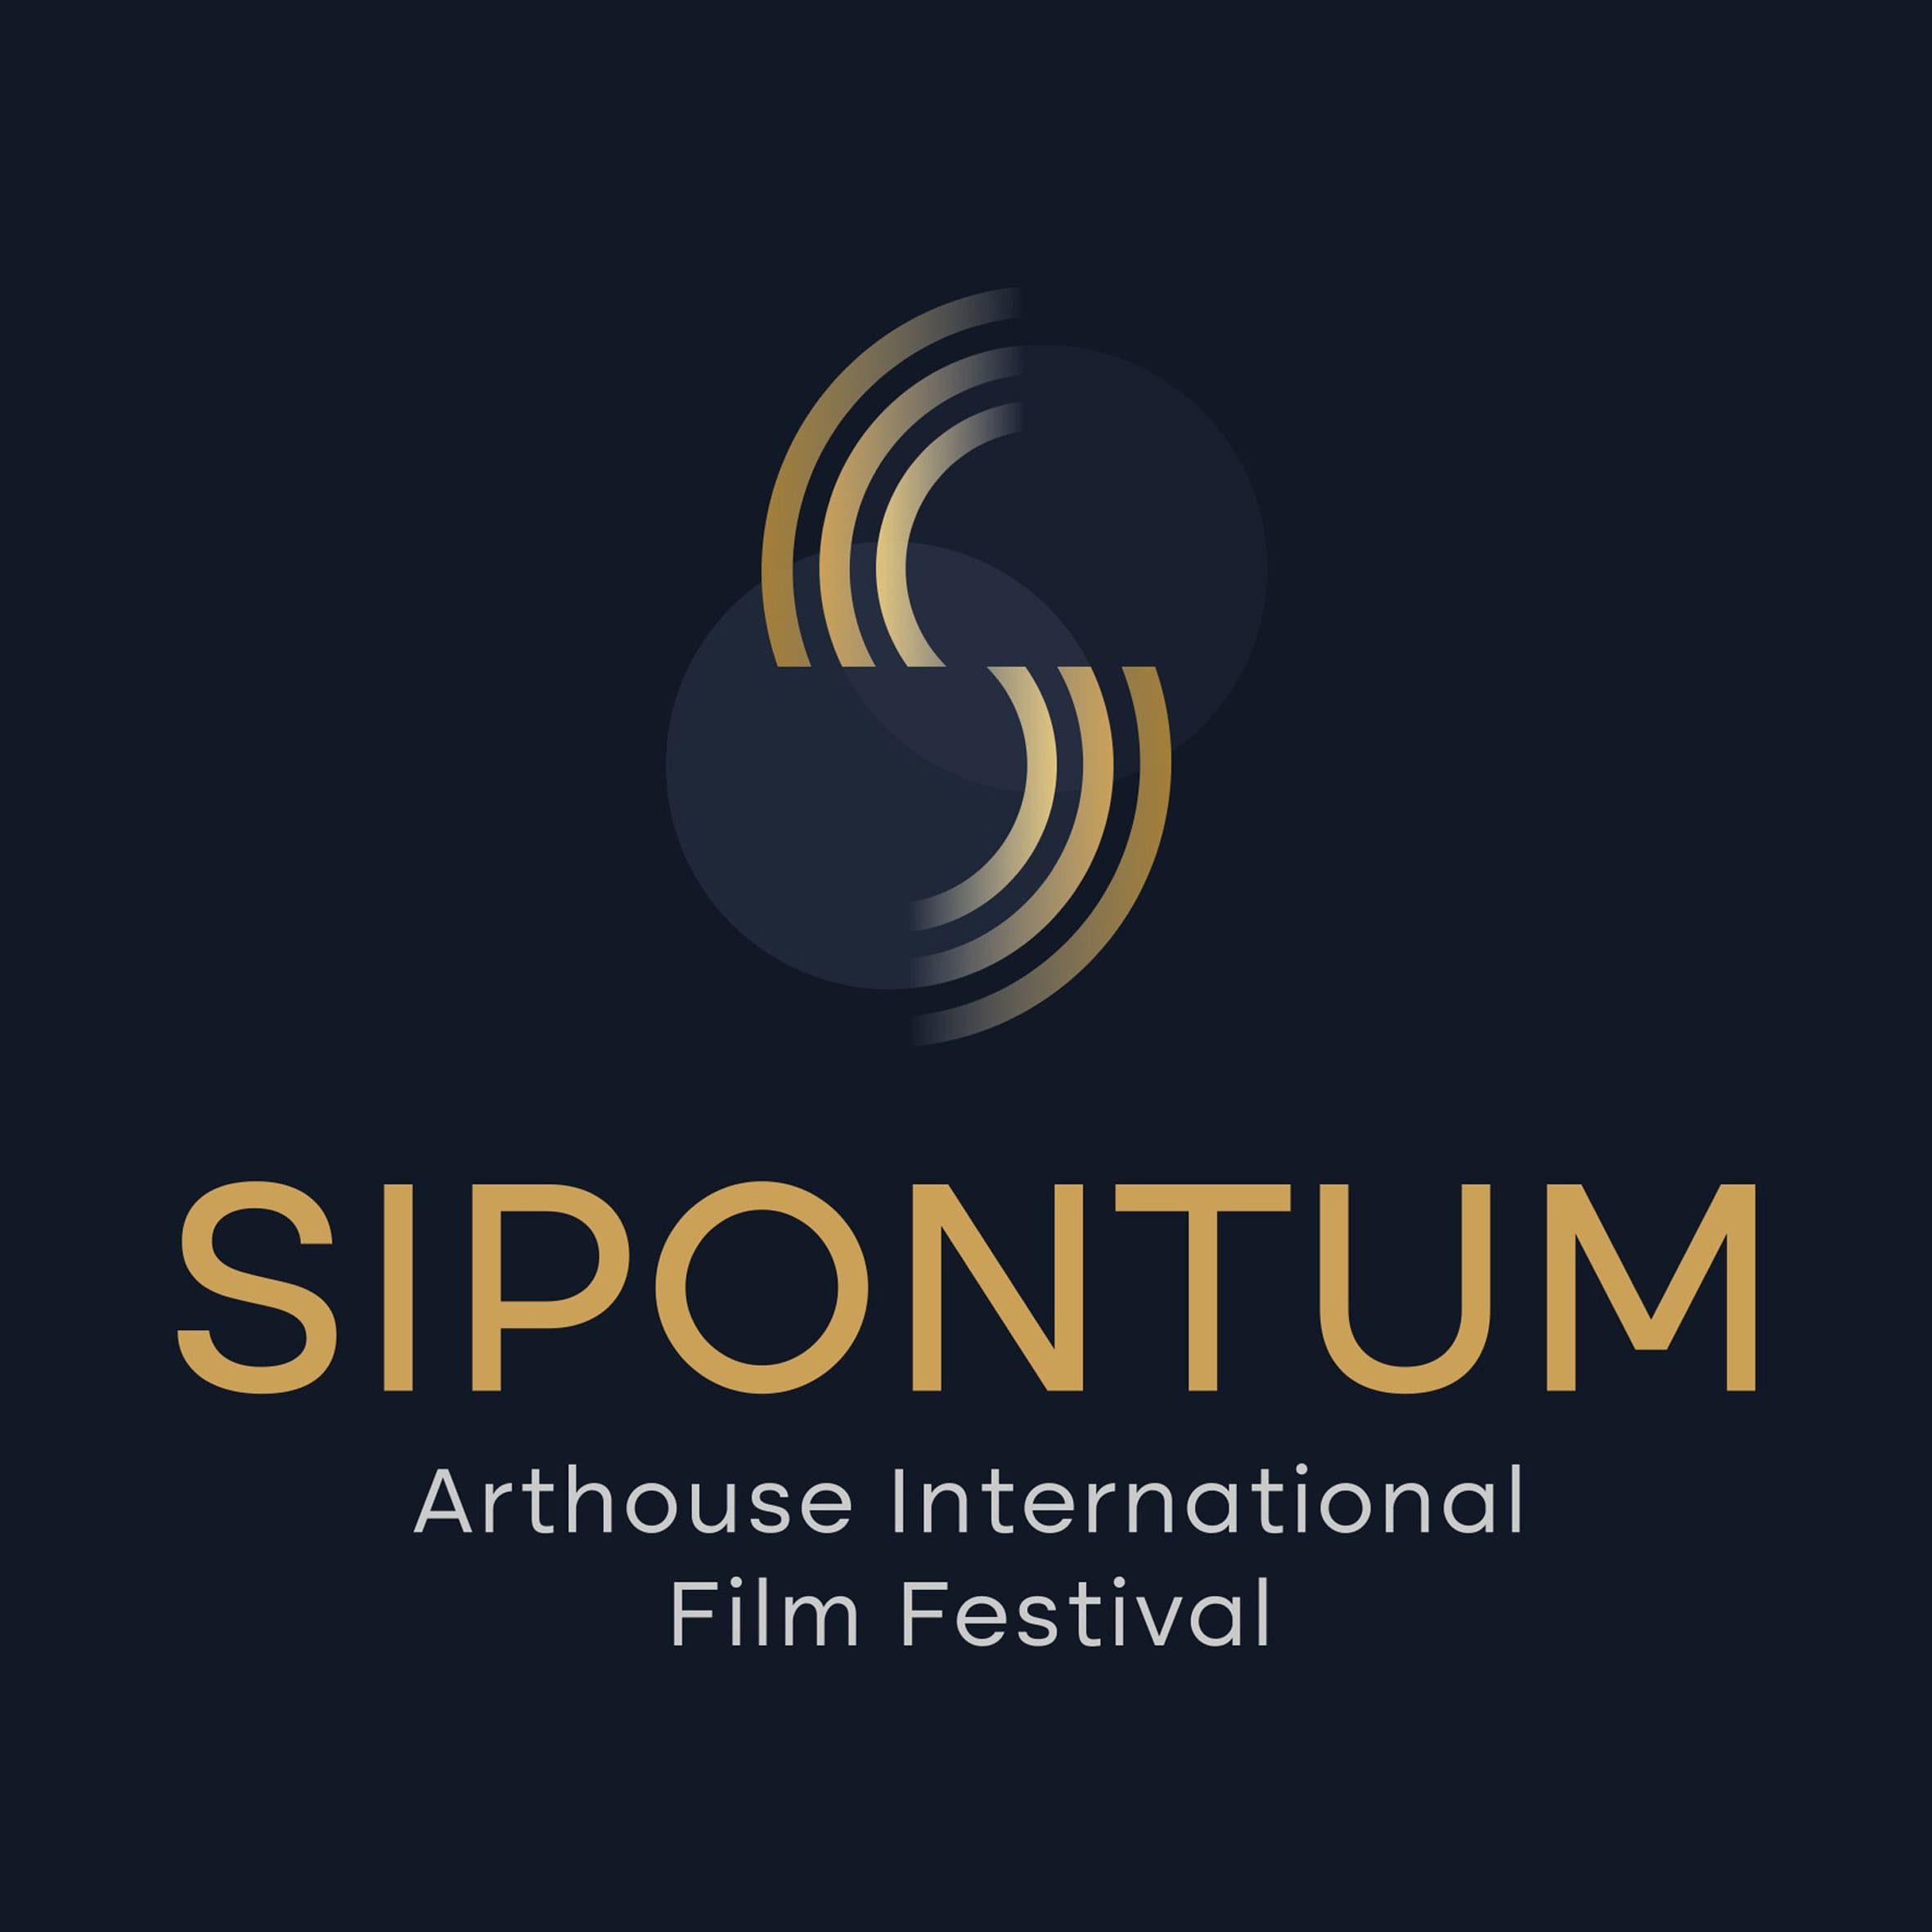 Sipontum Arthouse International Film Festival Logo